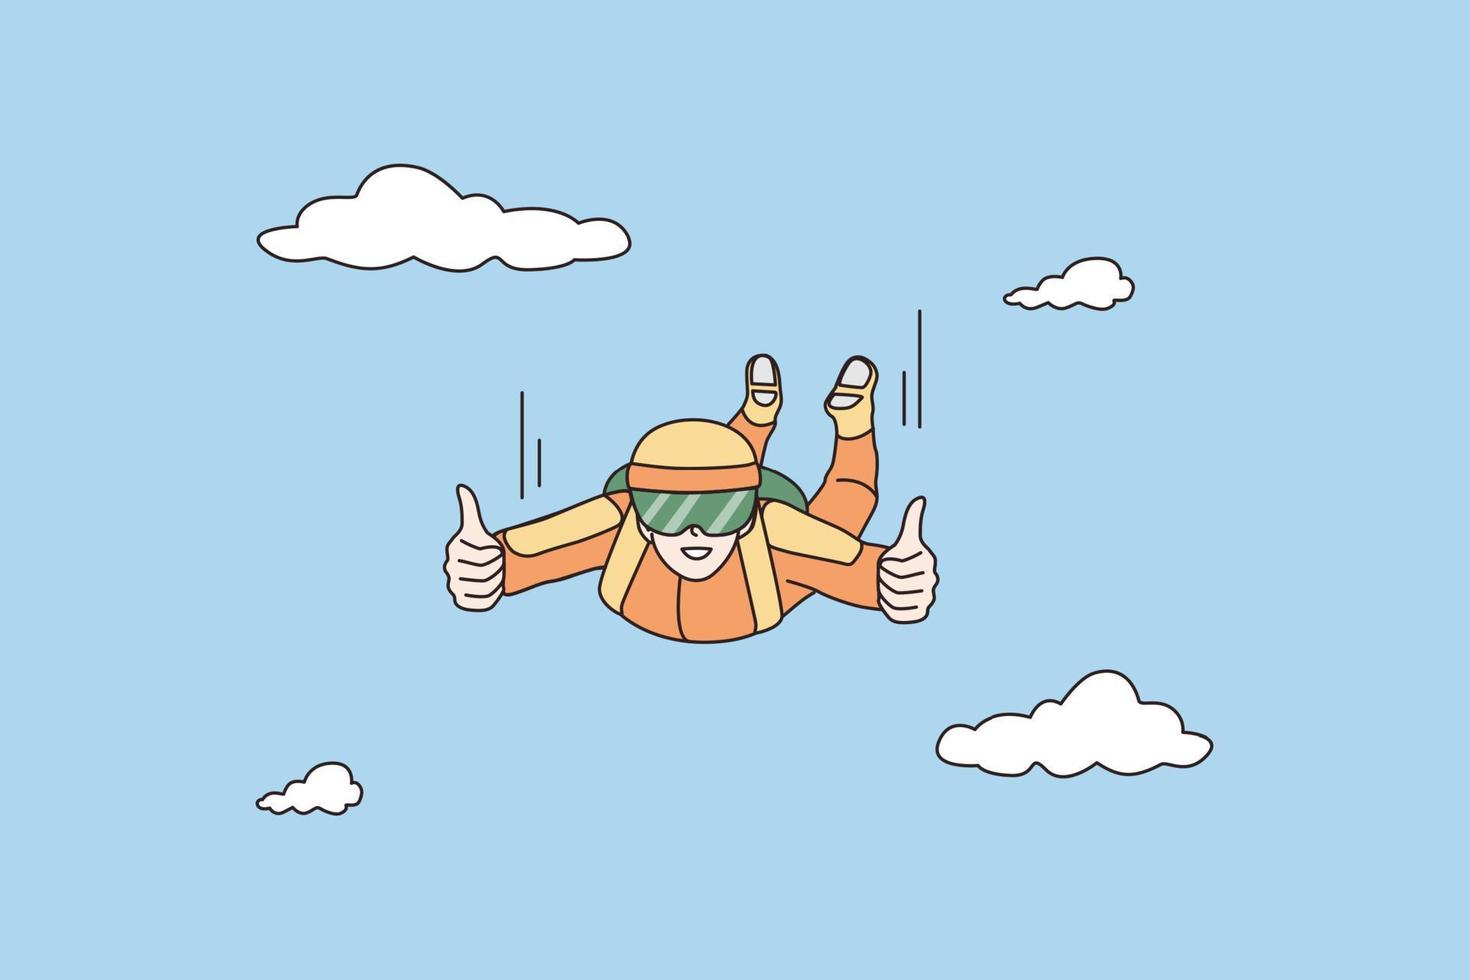 gelukkig parachutist vliegend in luchten genieten actief sport levensstijl. glimlachen parachute skydiver springen van lucht. Parachutespringen, extreem vermaak concept. tekenfilm karakter, vlak vector illustratie.